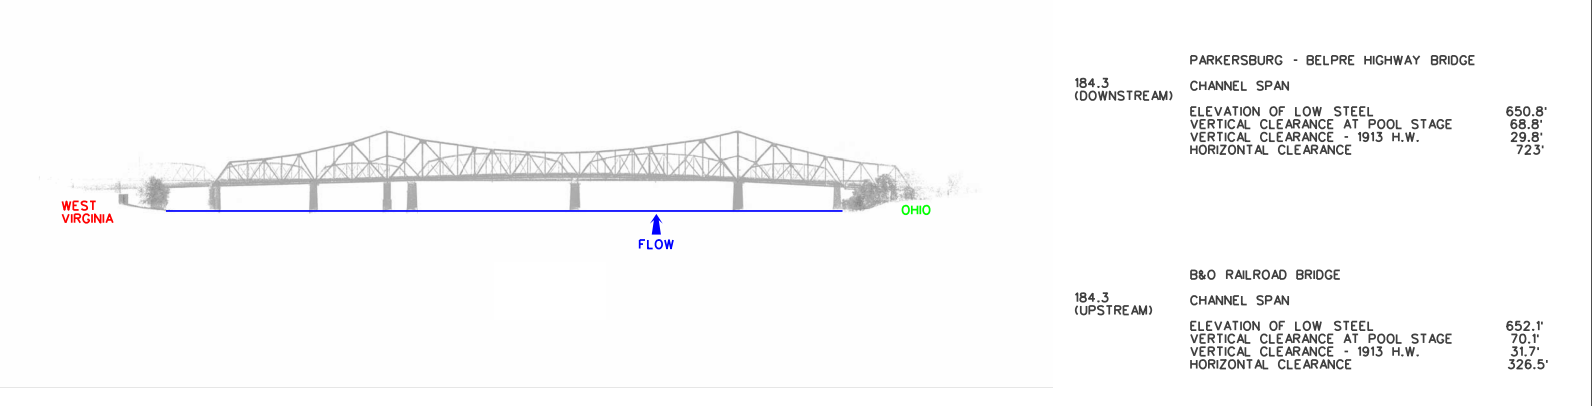 B&O R.R. Bridge Clearances | Bridge Calculator LLC